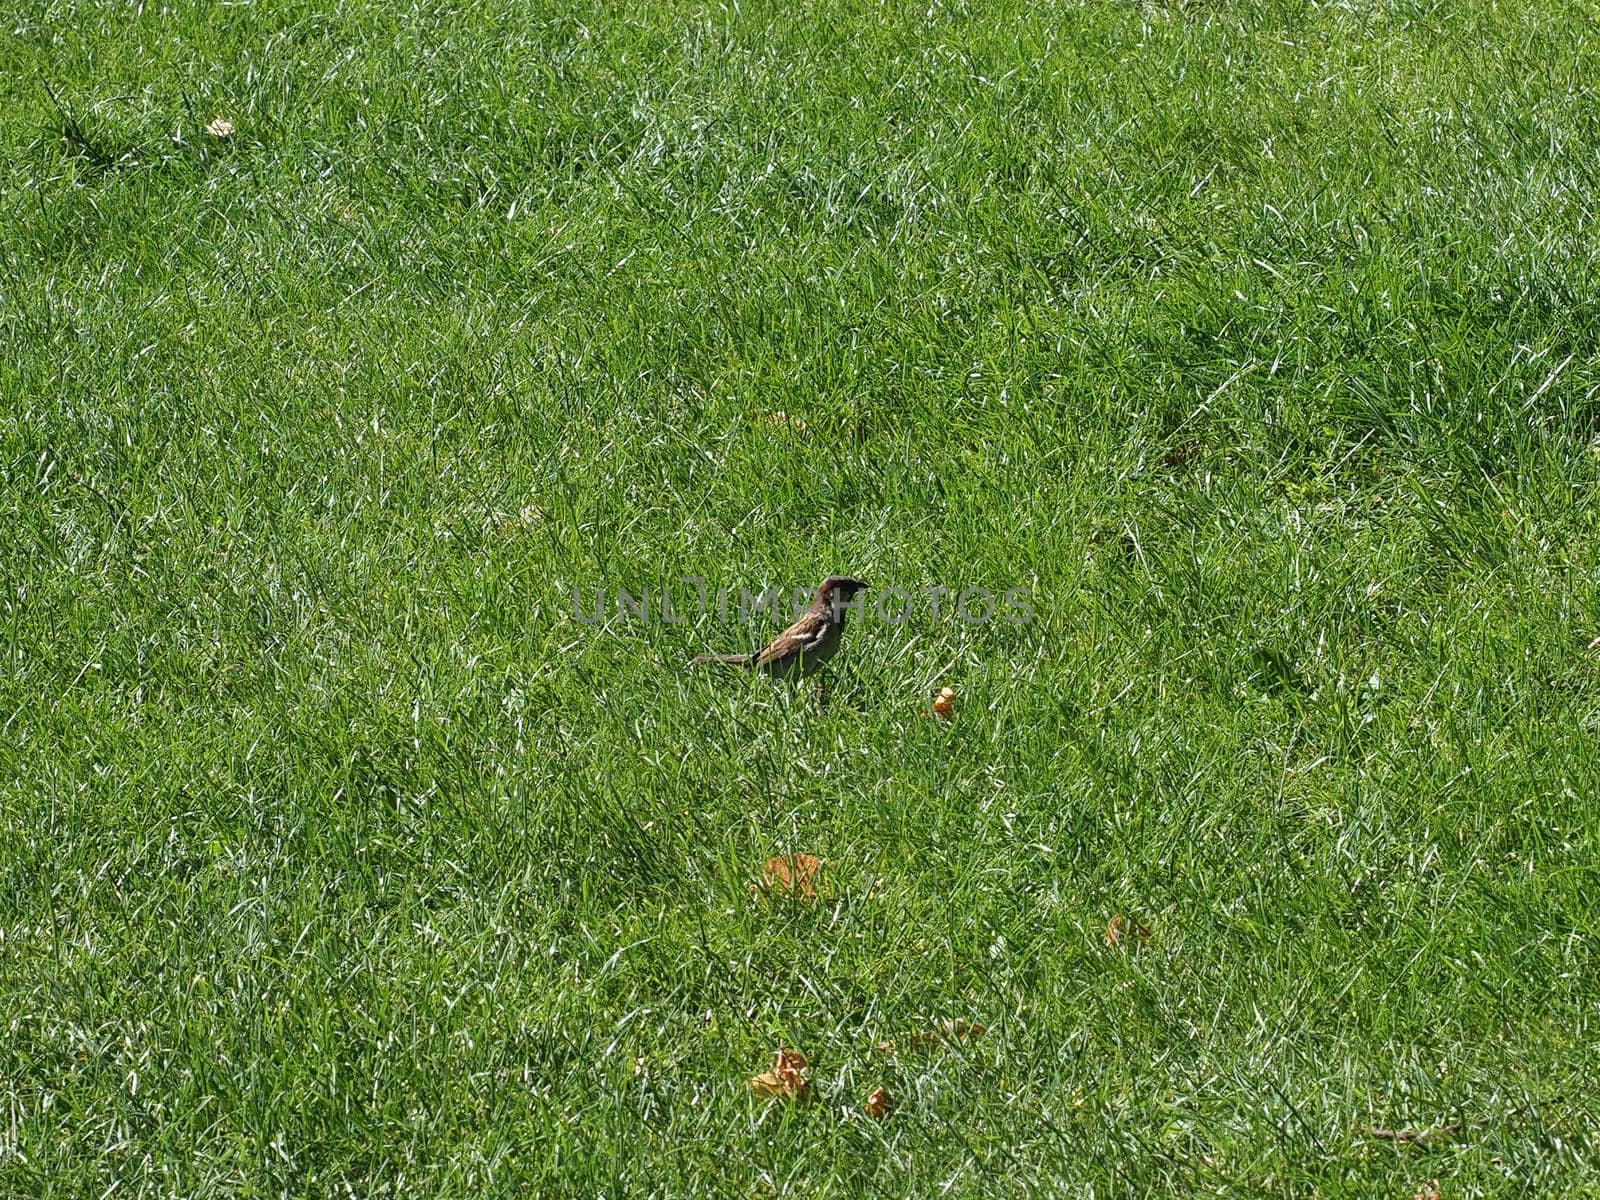 common blackbird scientific name Turdus merula of animal class birds in a meadow